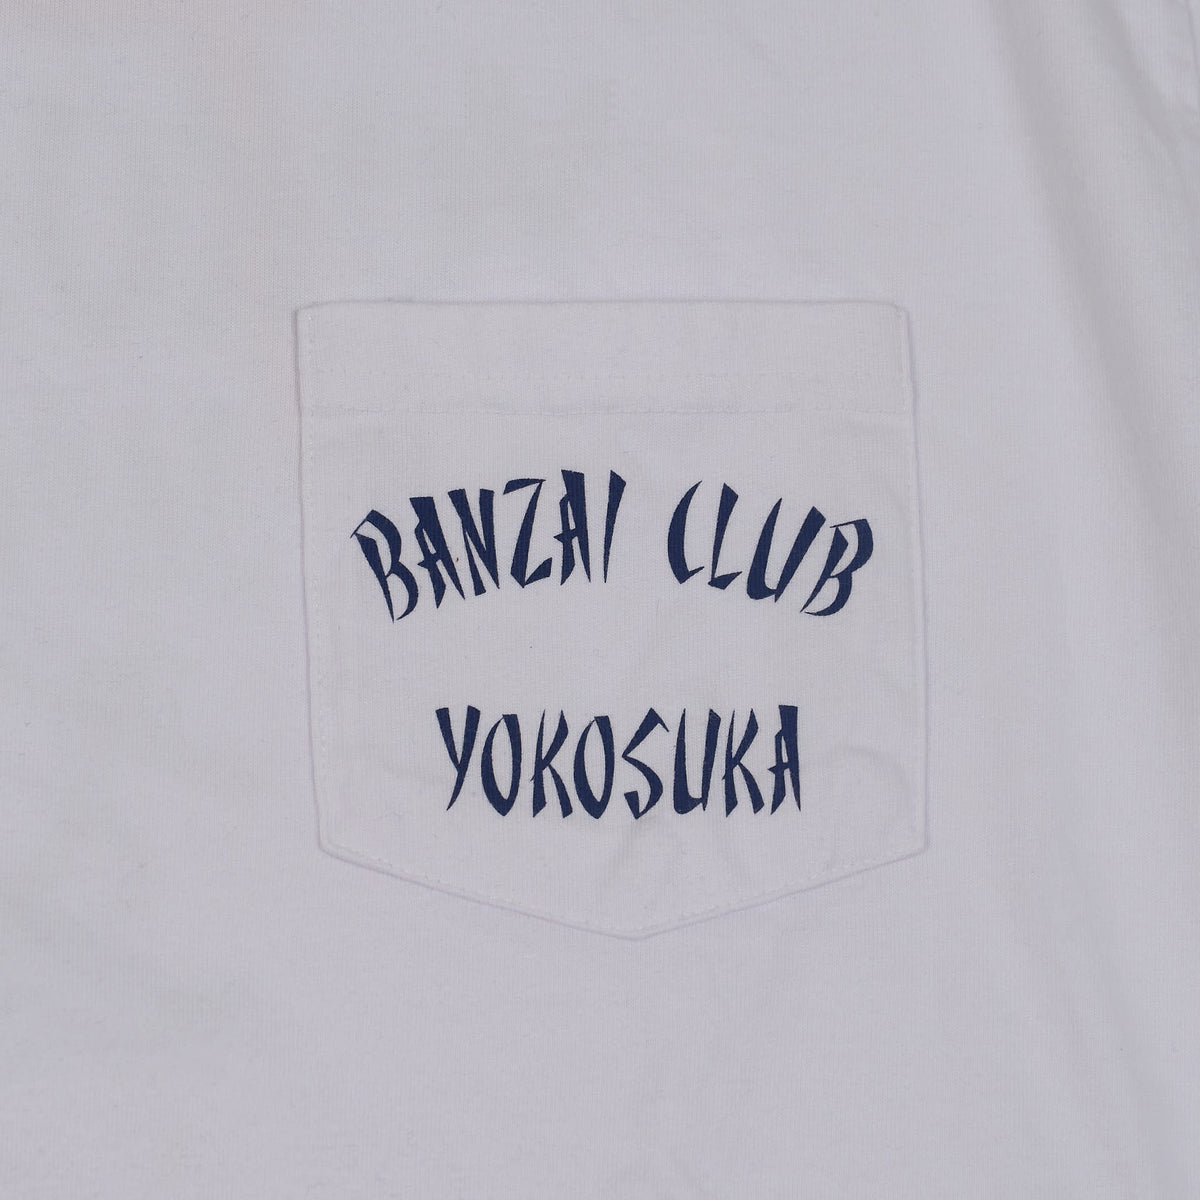 Buzz Rickson&#39;s Air Force Crew Neck Banzai Club Yokosuka Pocket T-Shirt